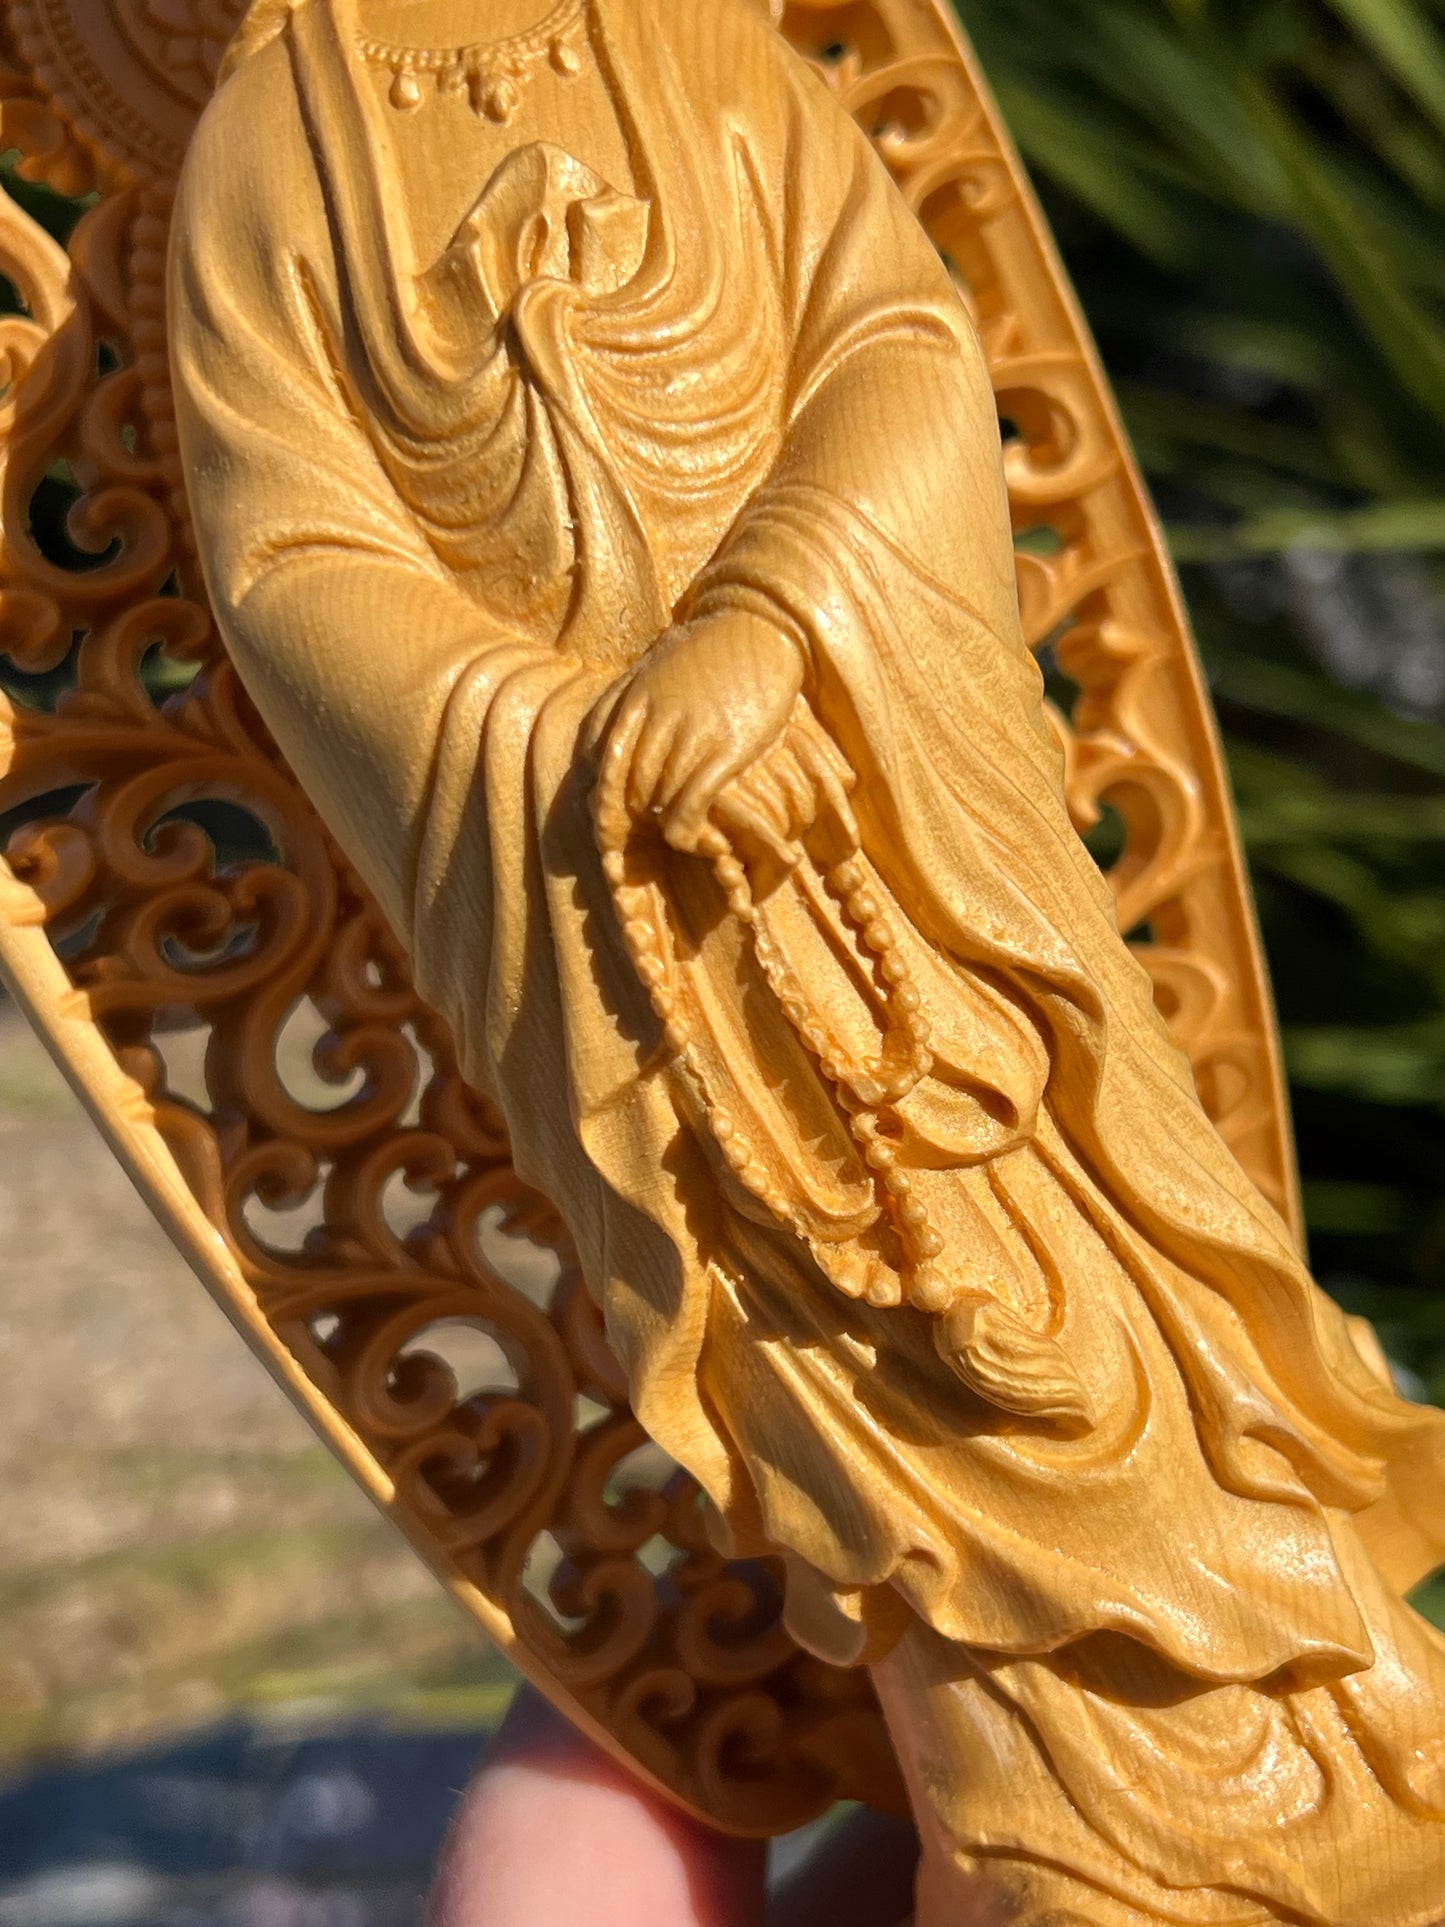 Boxwood Carving of Guan Yin